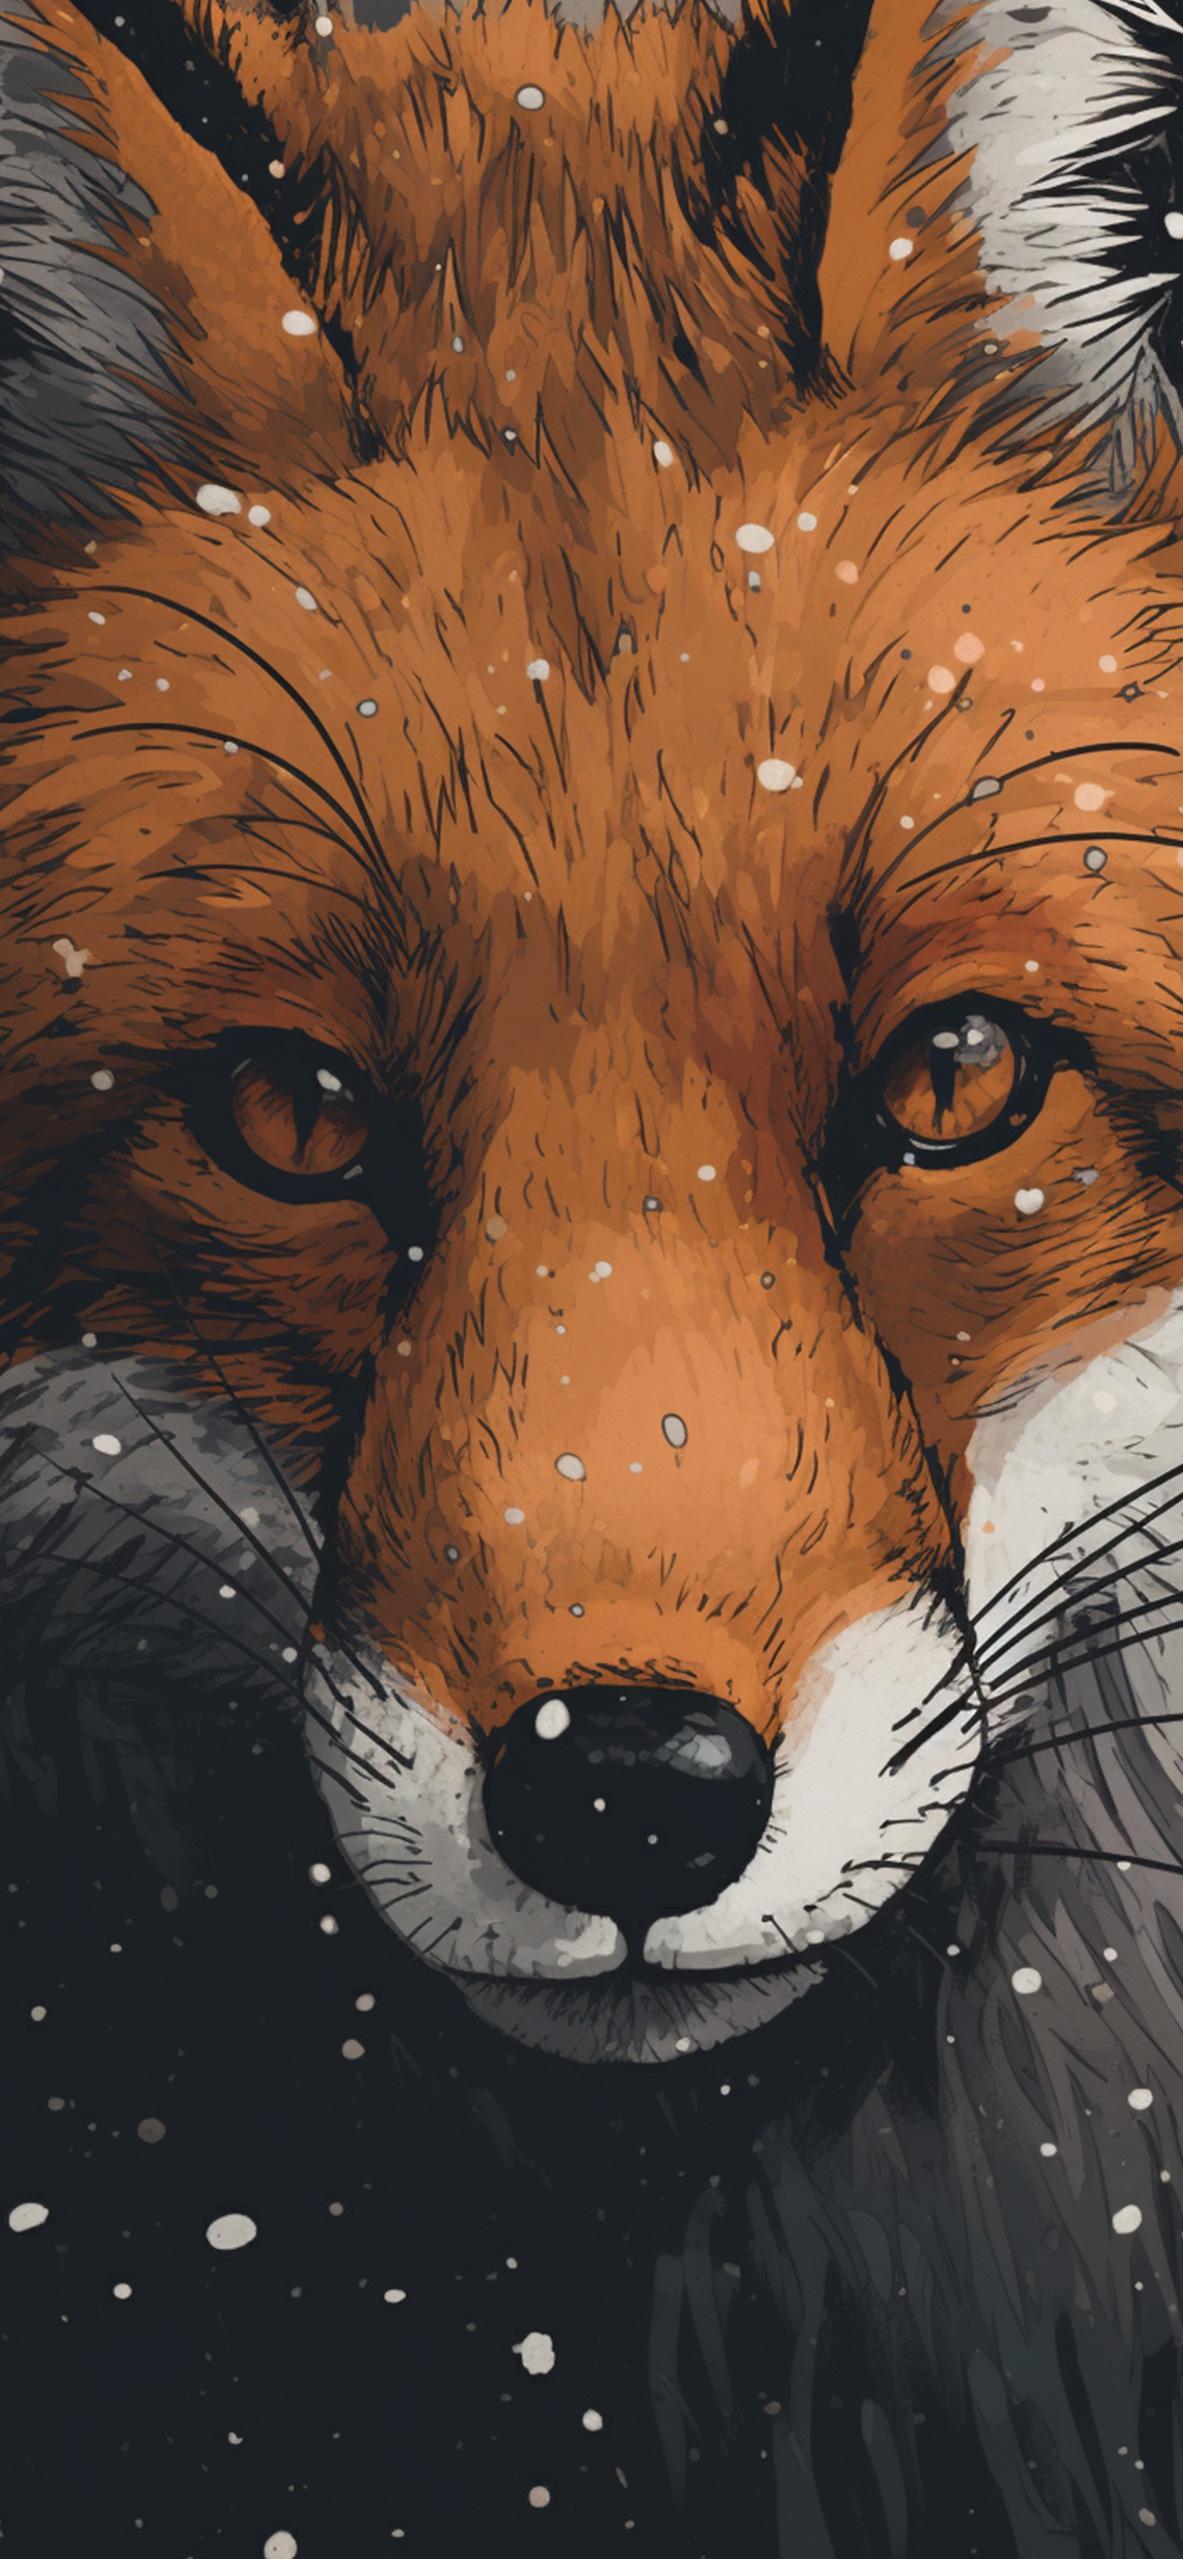 Fox Snow Art Wallpaper Aesthetic For iPhone